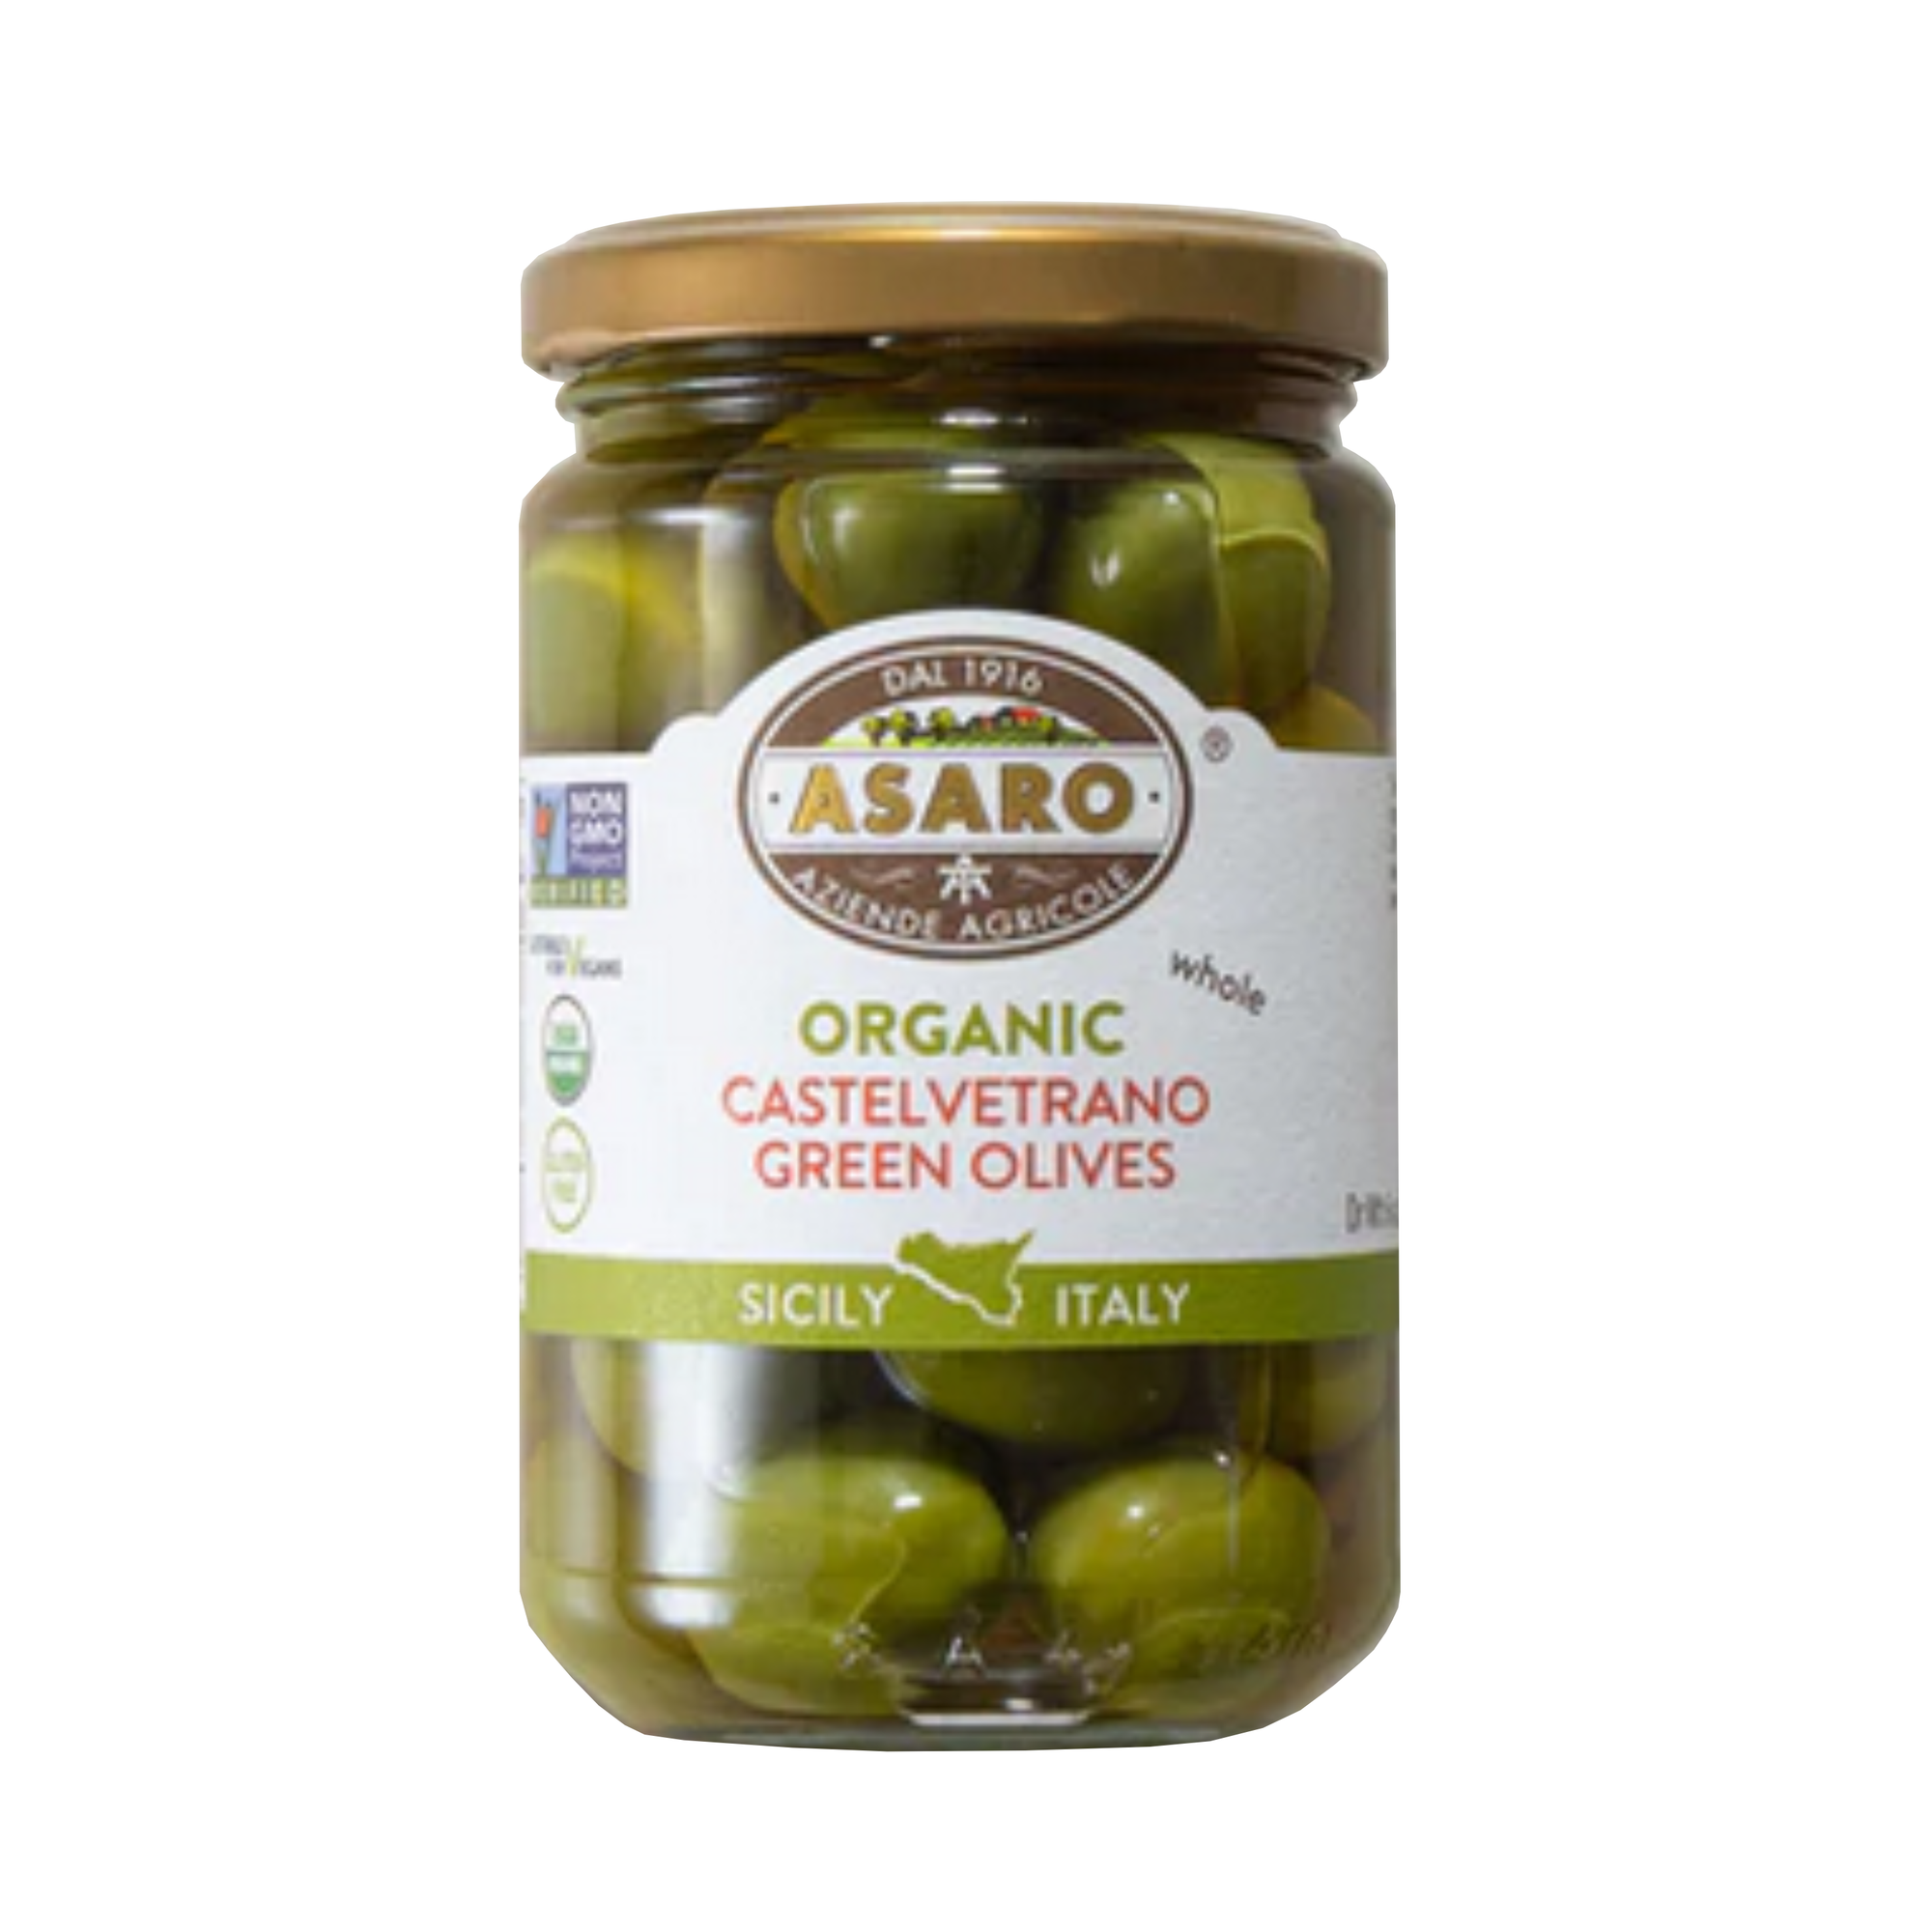 Asaro Organic Castelvetrano Green Olives